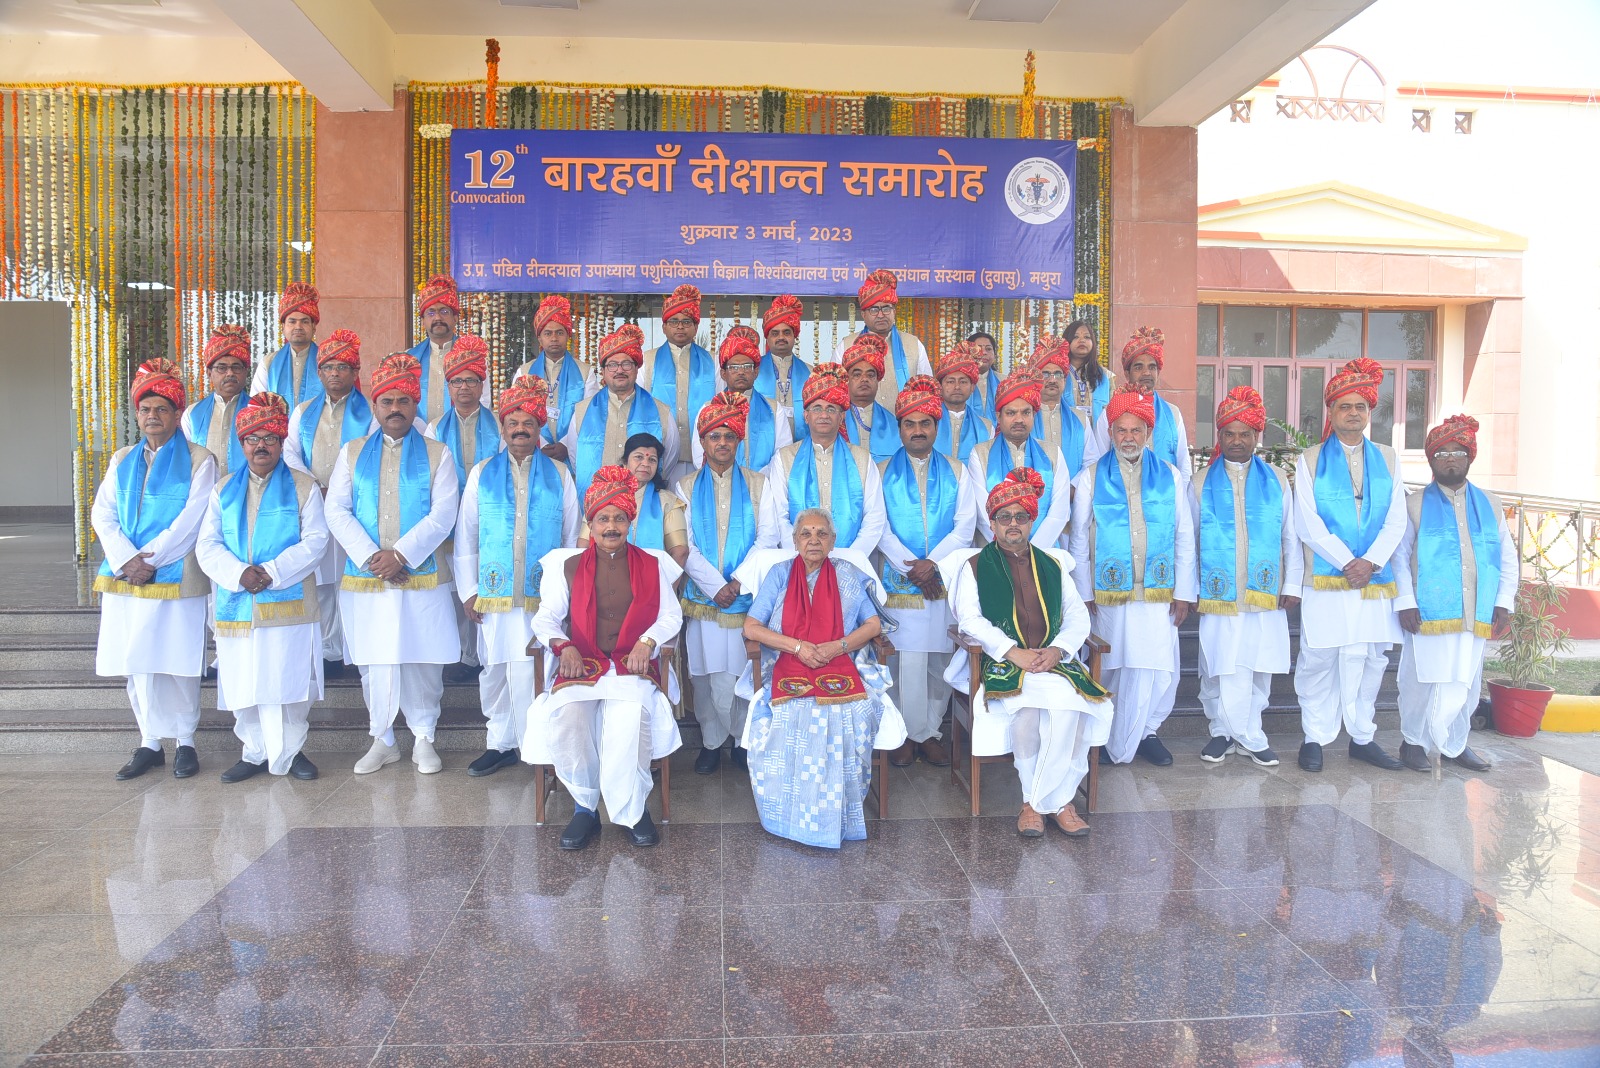 12th Convocation on 3rd March 2023 in DUVASU, Mathura